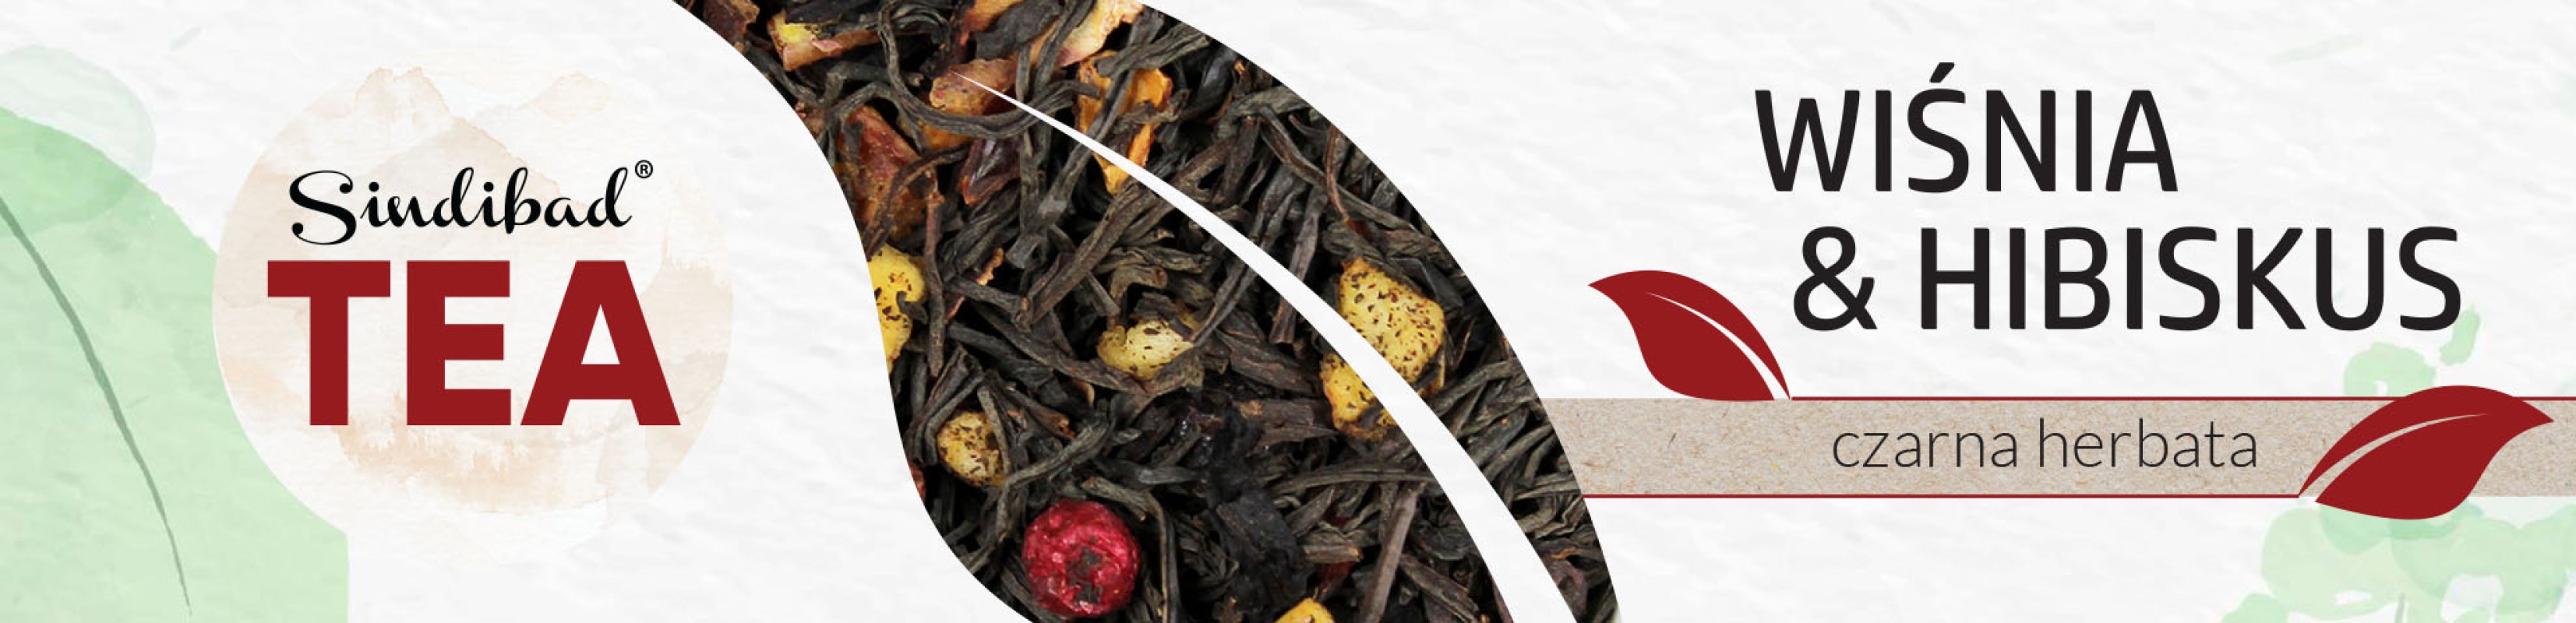 wiśnia i hibiskus czarna herbata Sindibad 4